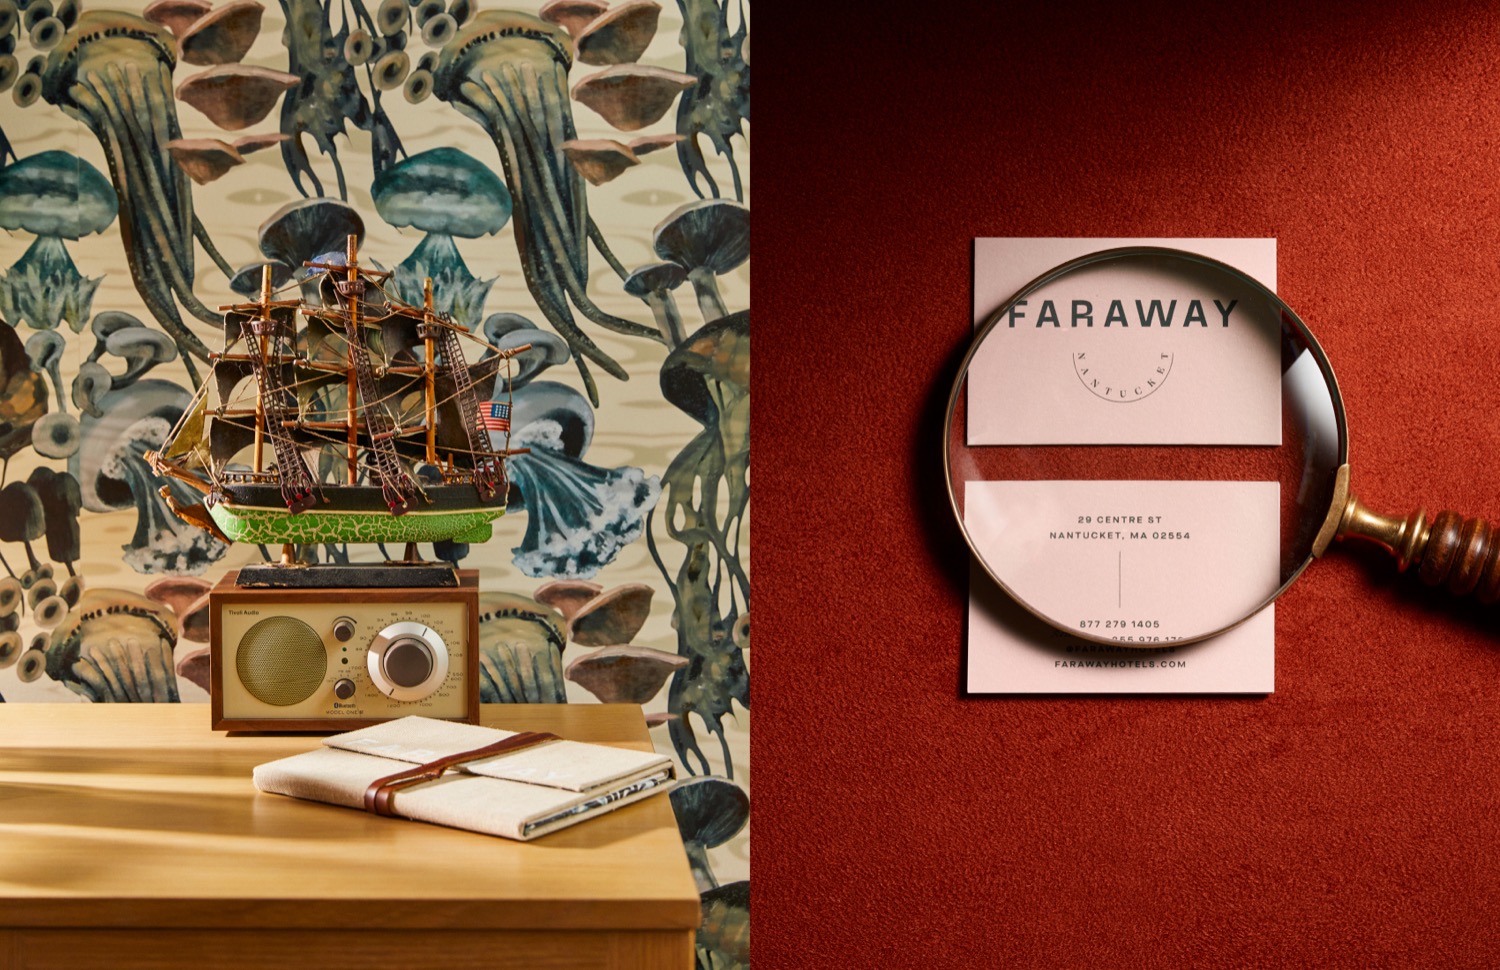 Faraway精品飯店品牌視覺設計